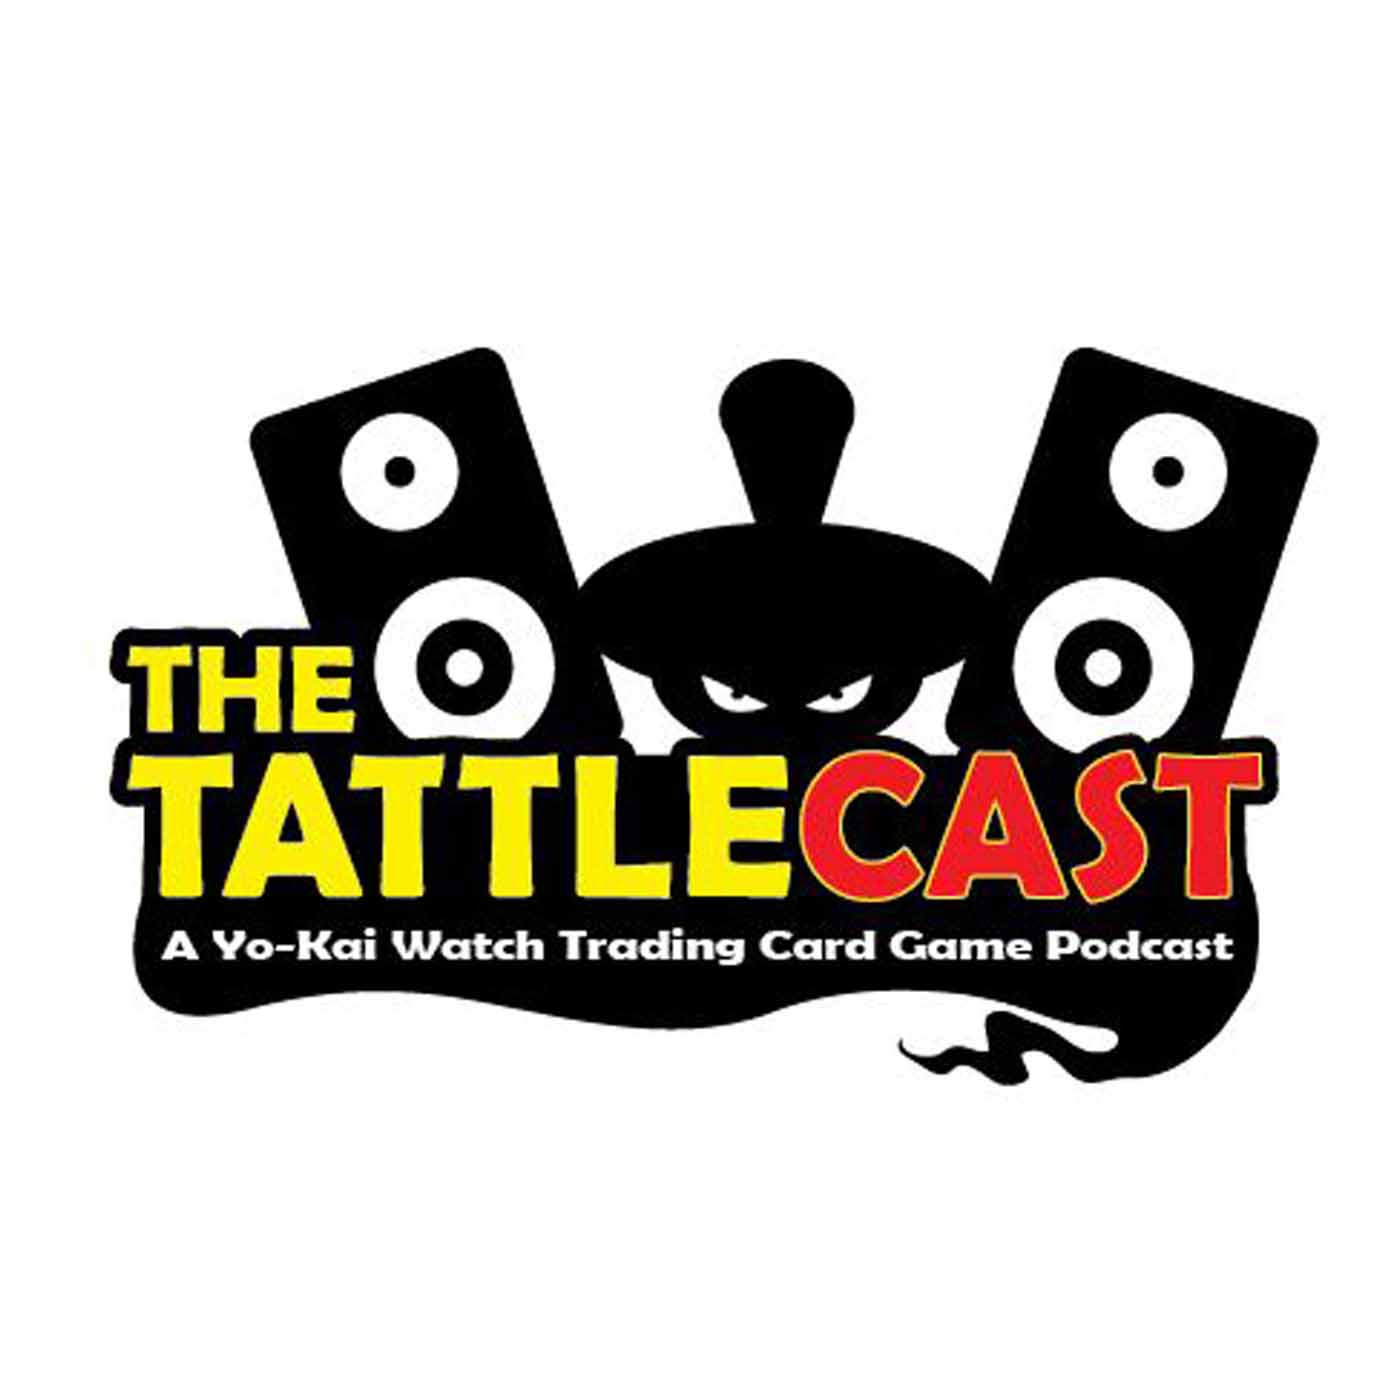 The Tattlecast: Yo-kai Watch Trading Card Game Podcast